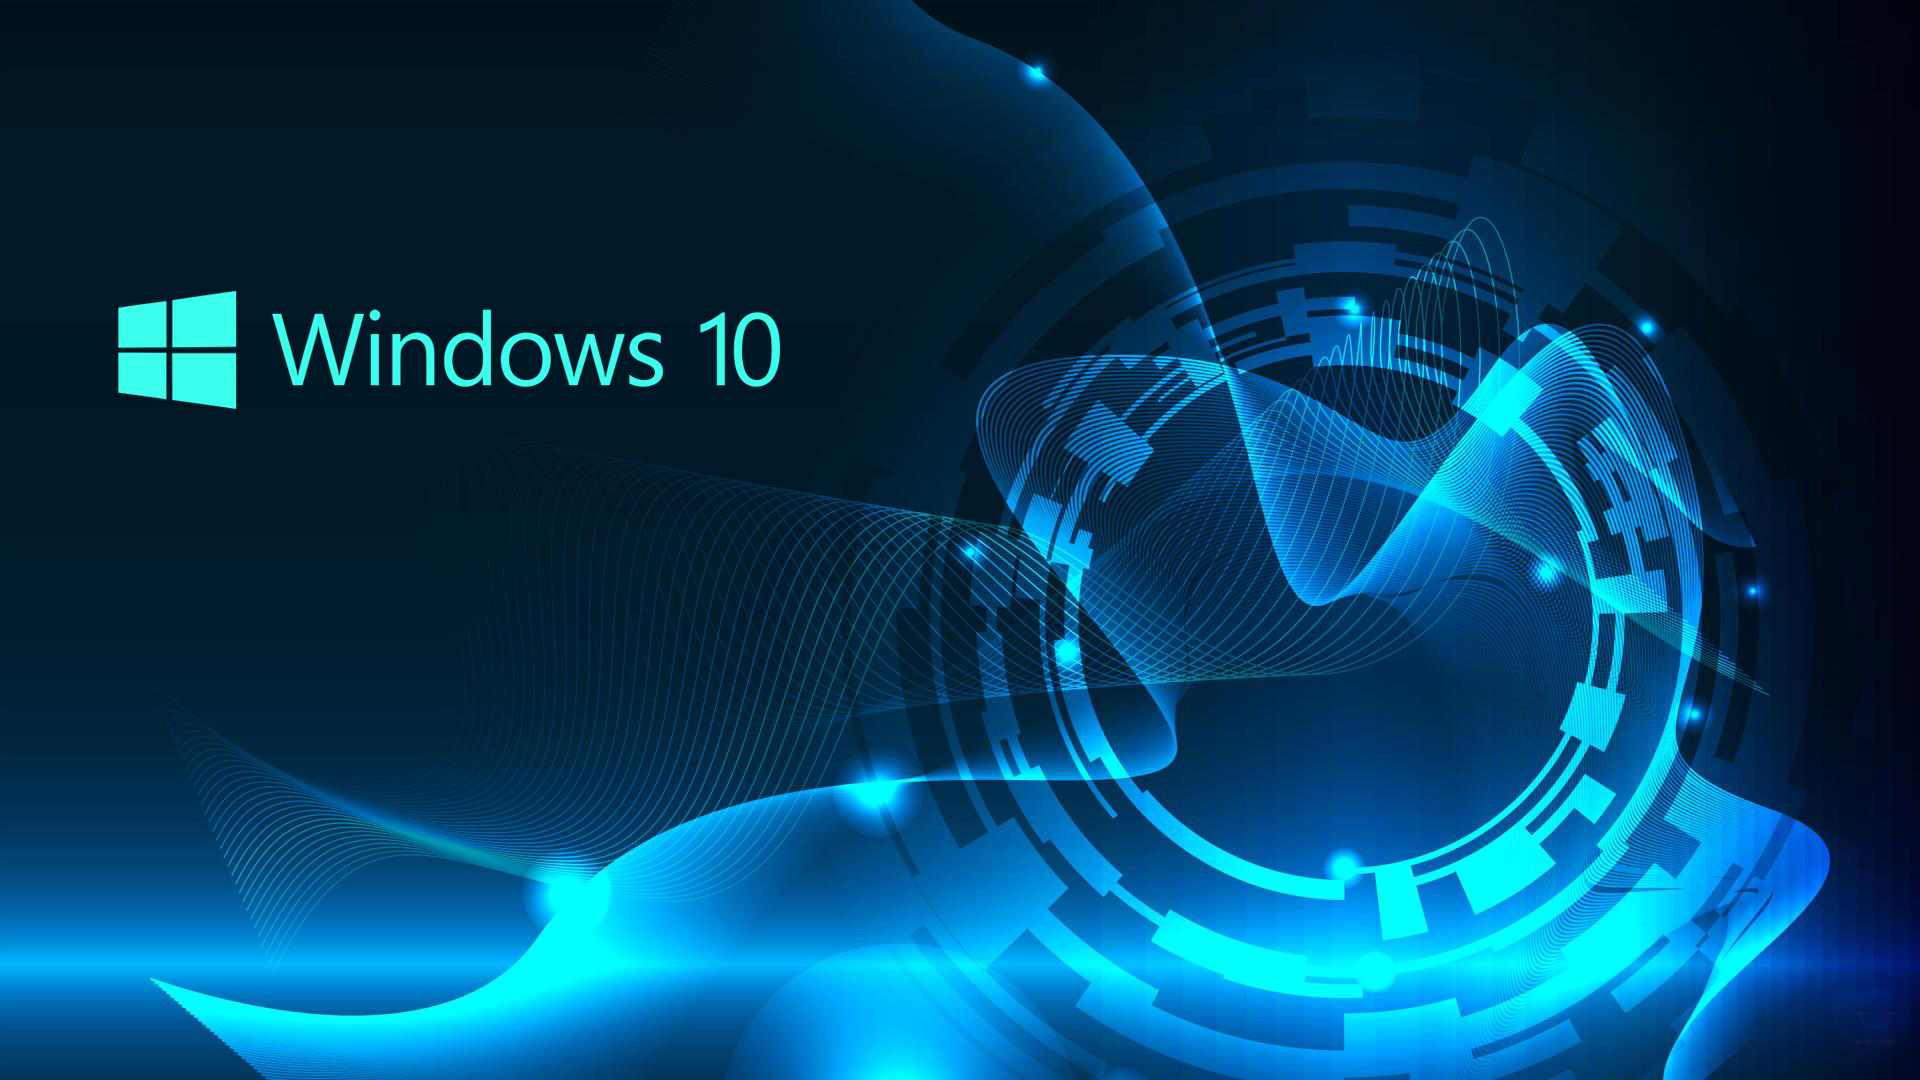 Windows 10 Wallpaper Hd 1080P Free Download - HD ...